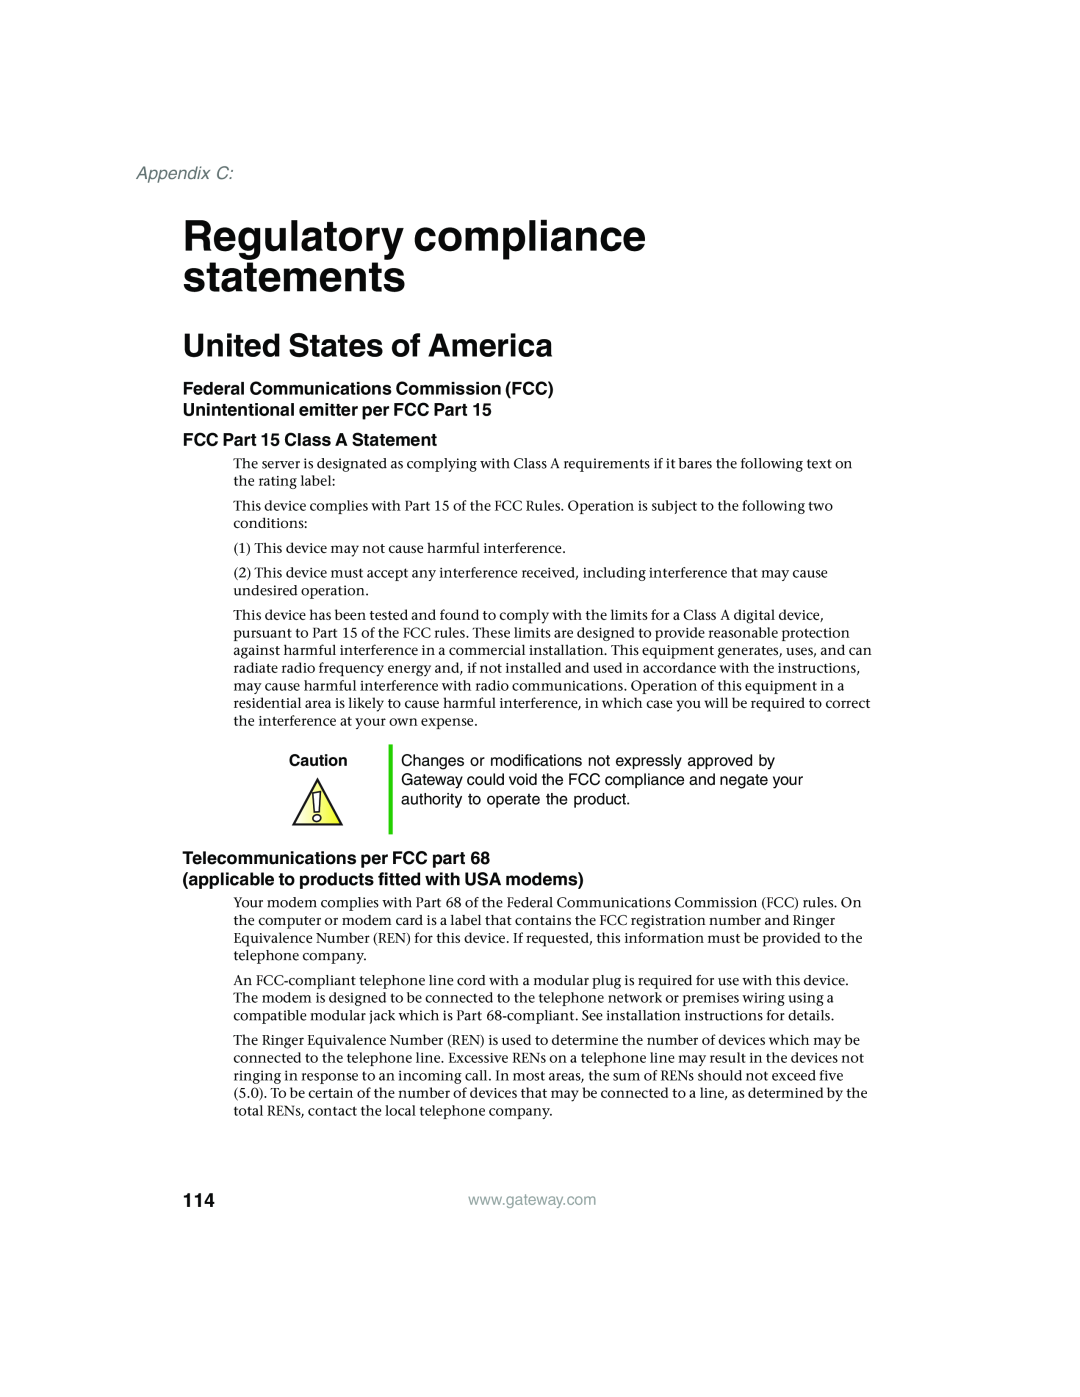 Gateway 980 Regulatory compliance statements, United States of America, Federal Communications Commission FCC, Appendix C 